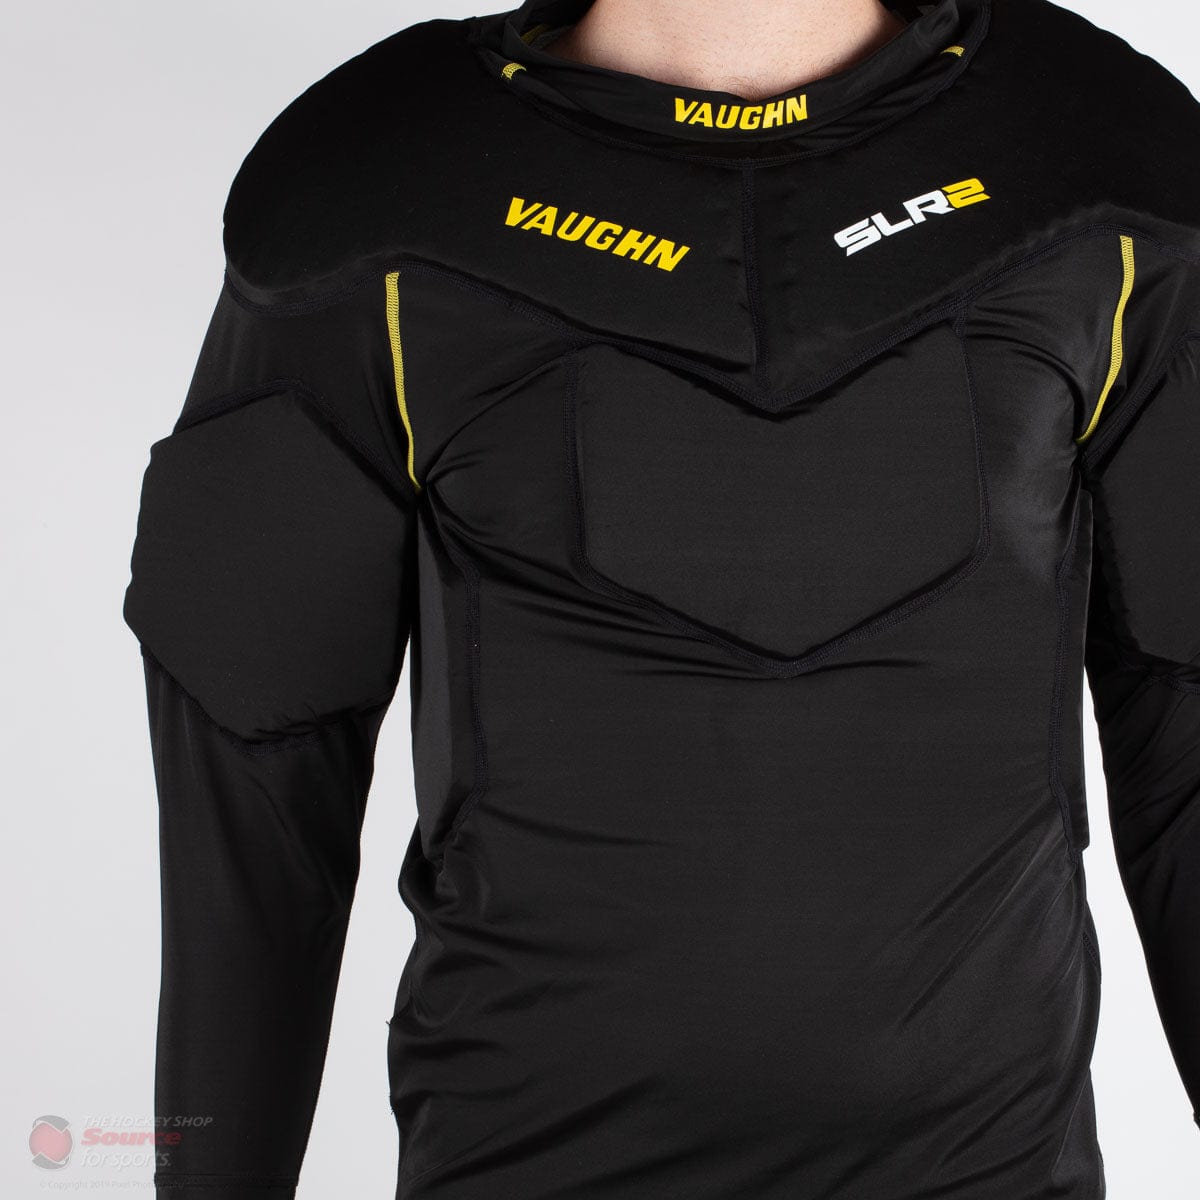 Vaughn SLR Pro Padded Compression Goalie Shirt – Max Performance